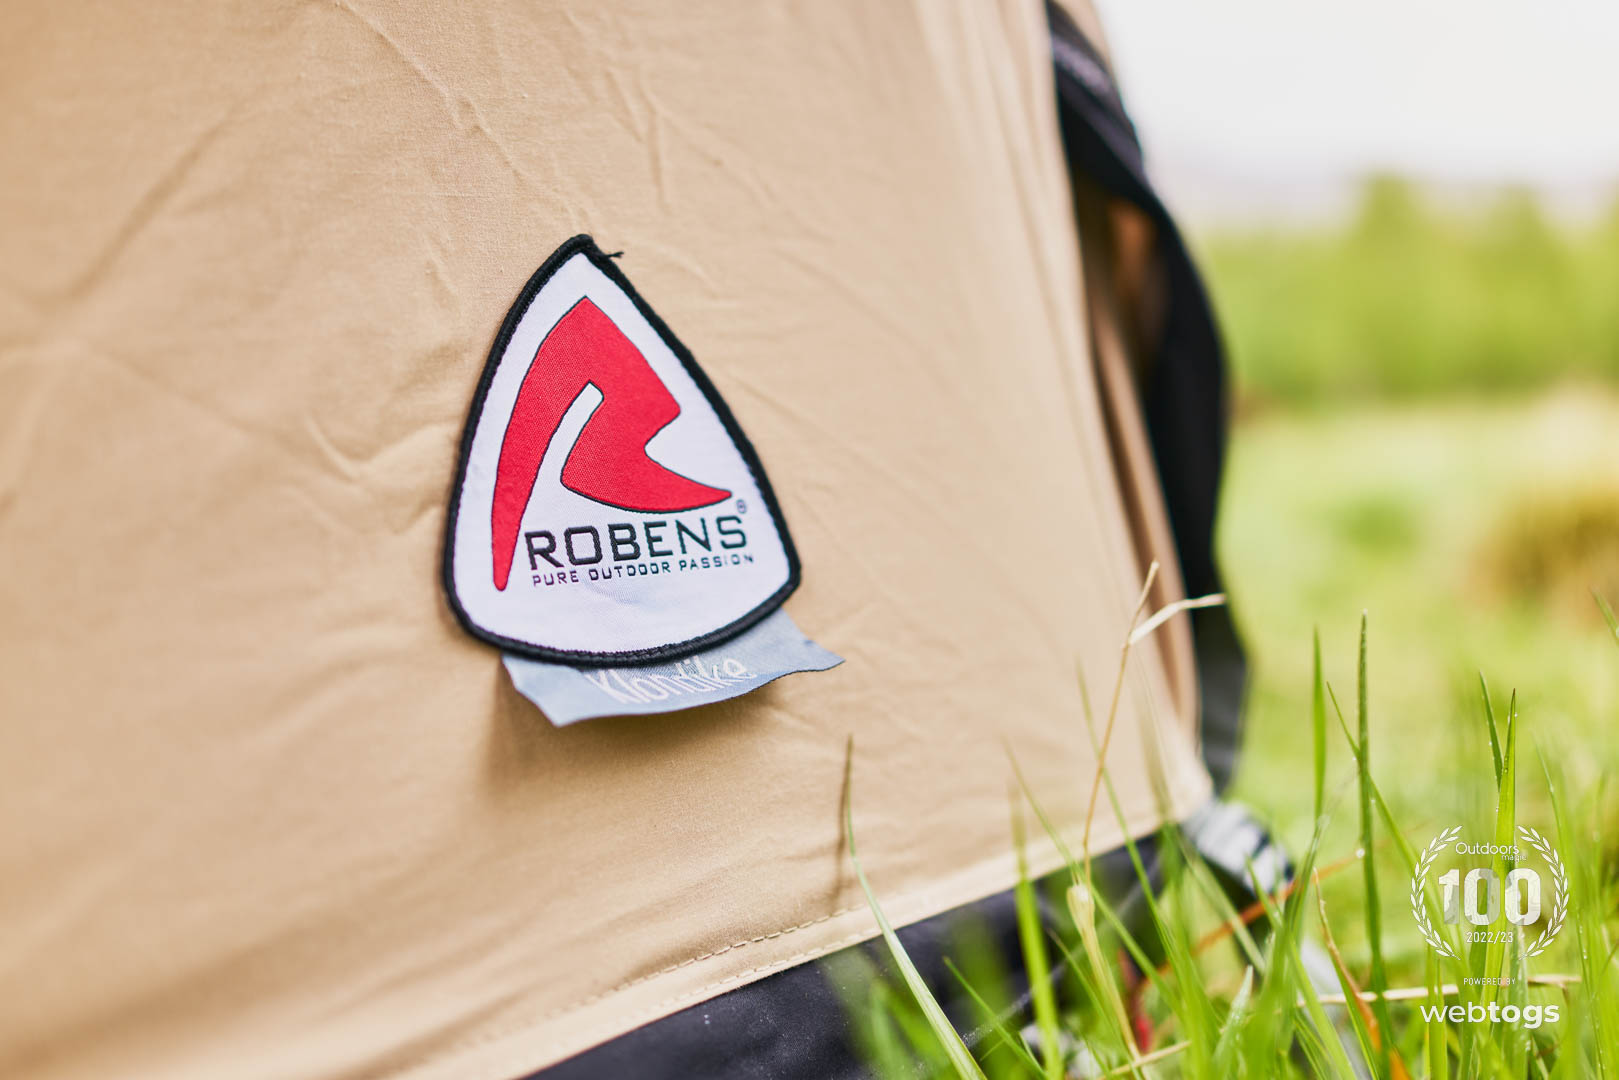 Robens Klondike Tent | Review